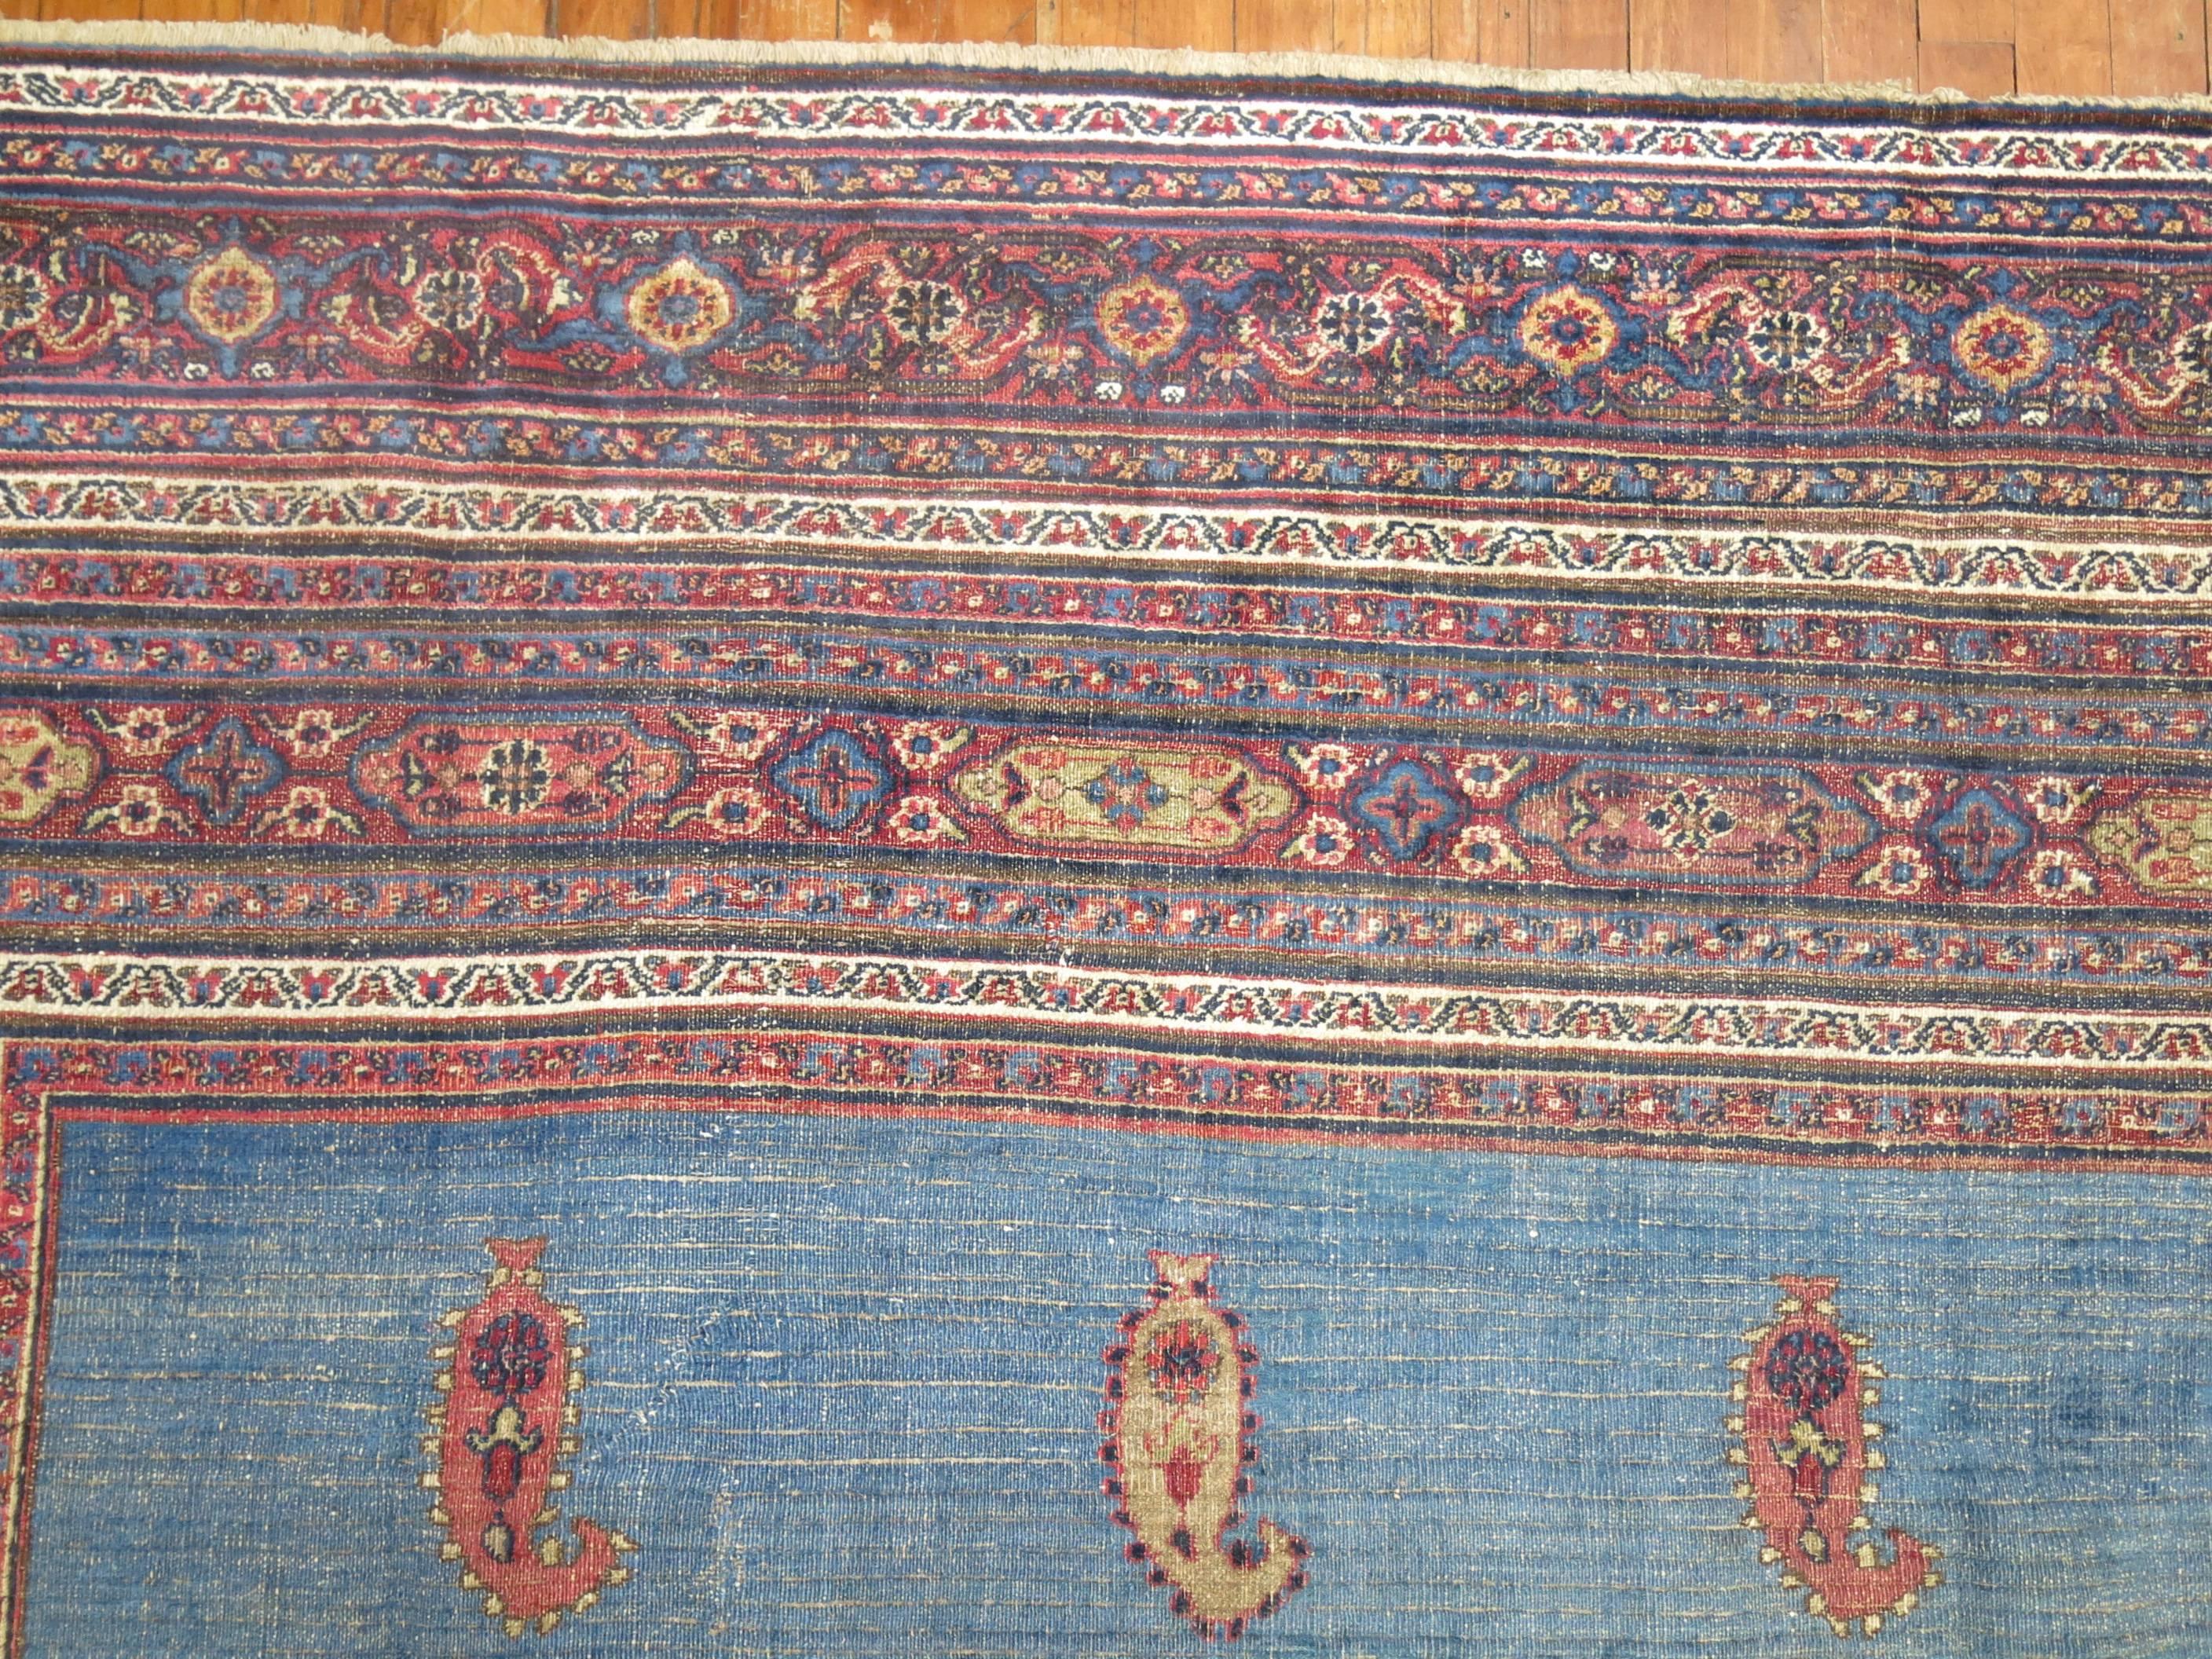 Hand-Woven Antique Persian Doroksh Carpet For Sale